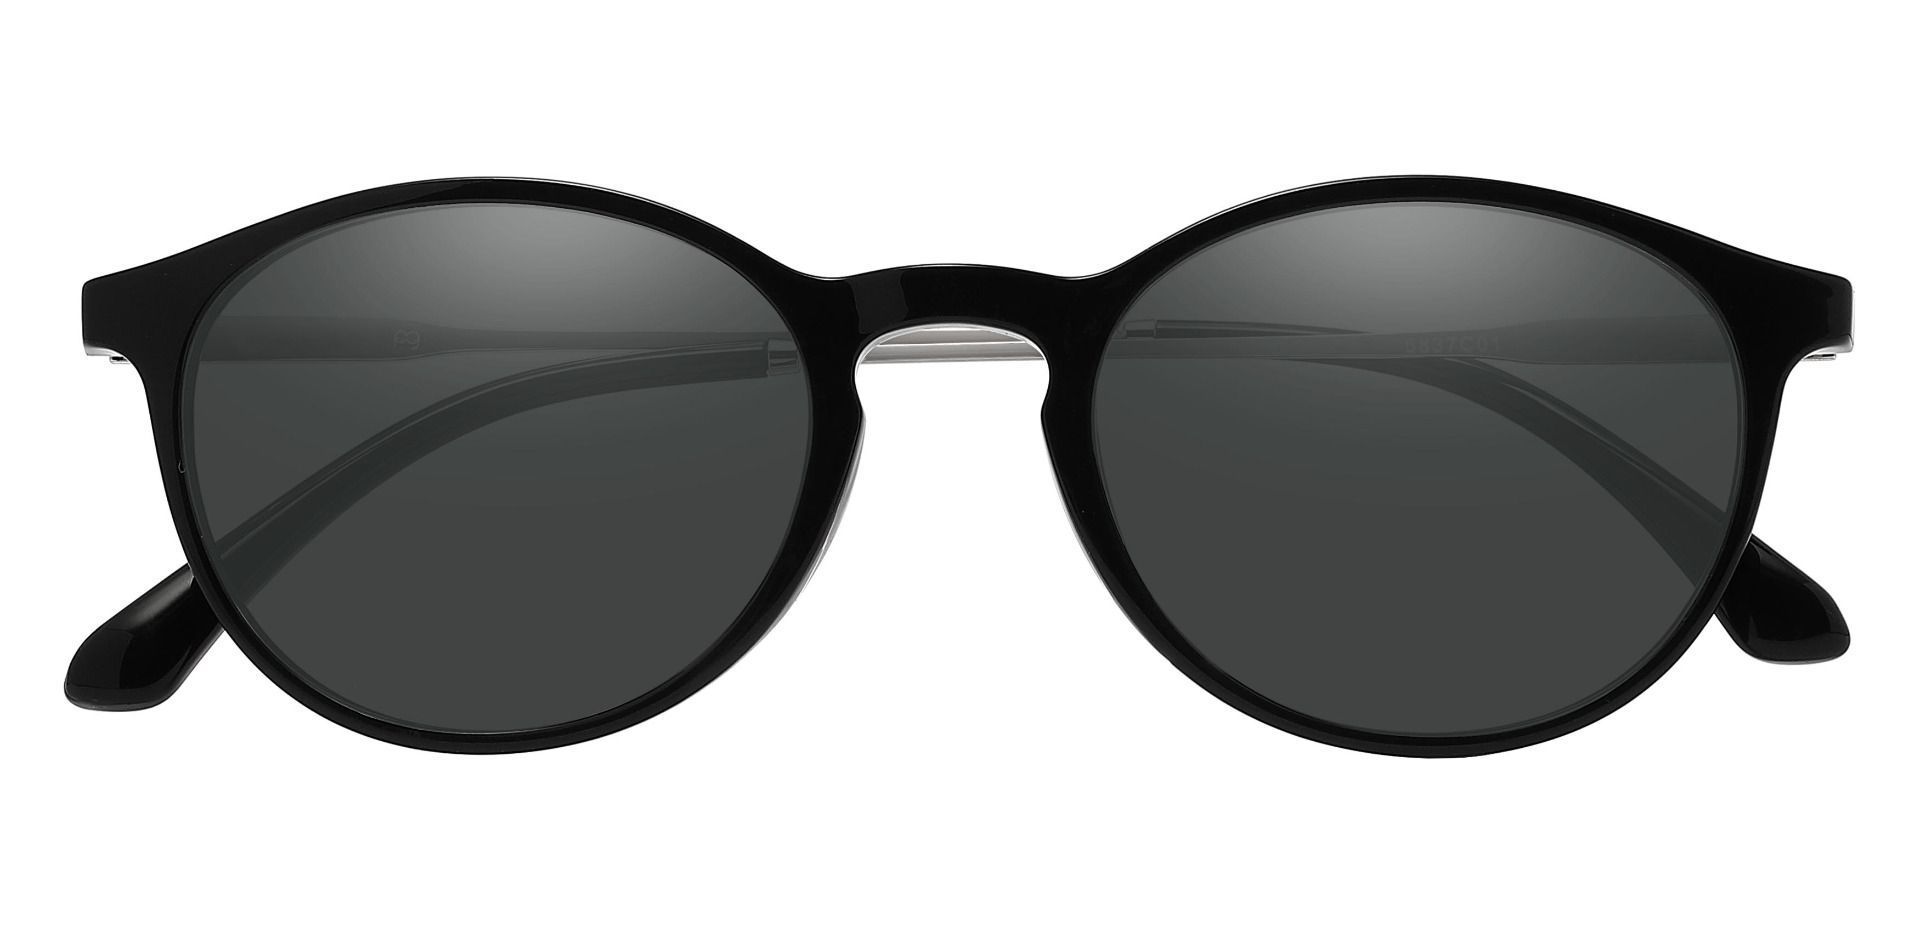 Felton Oval Non-Rx Sunglasses - Black Frame With Gray Lenses